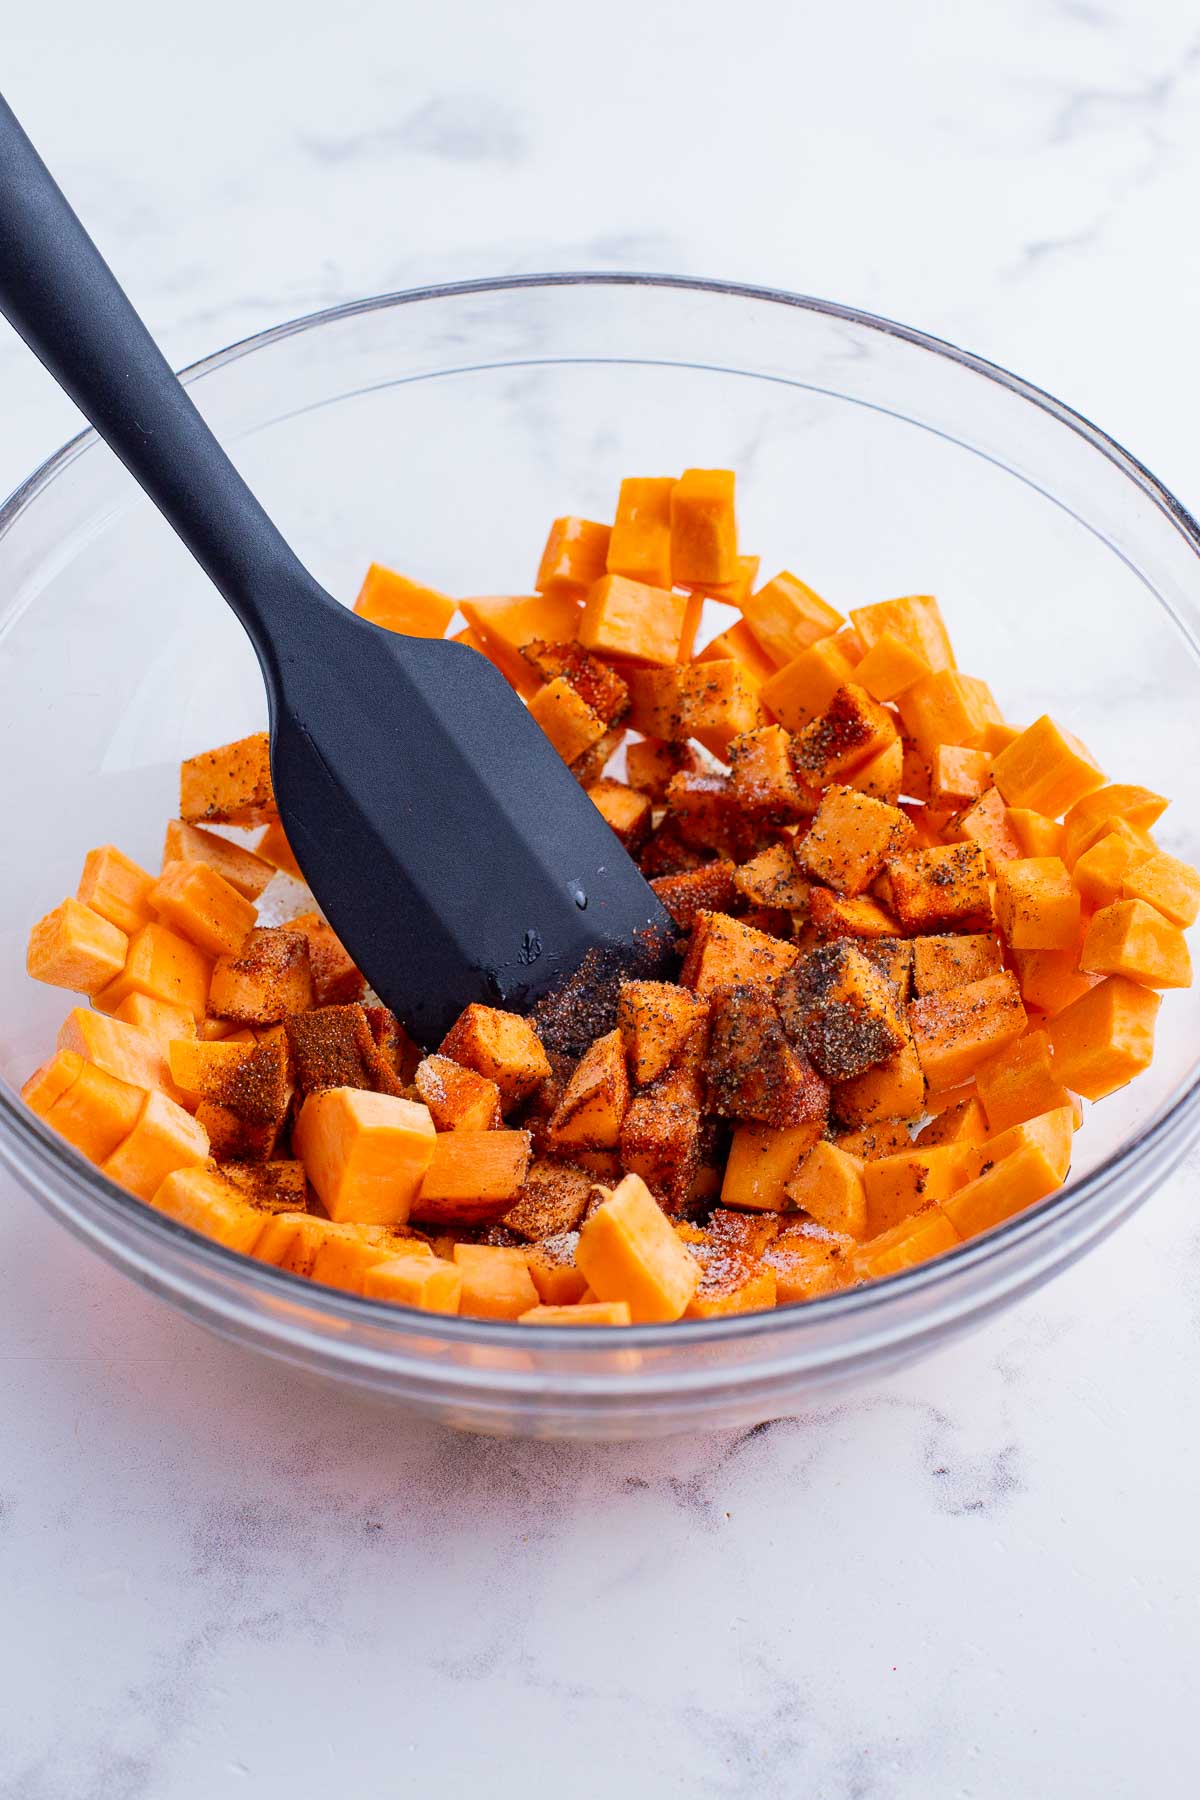 Sweet potatoes are seasoned before baking.